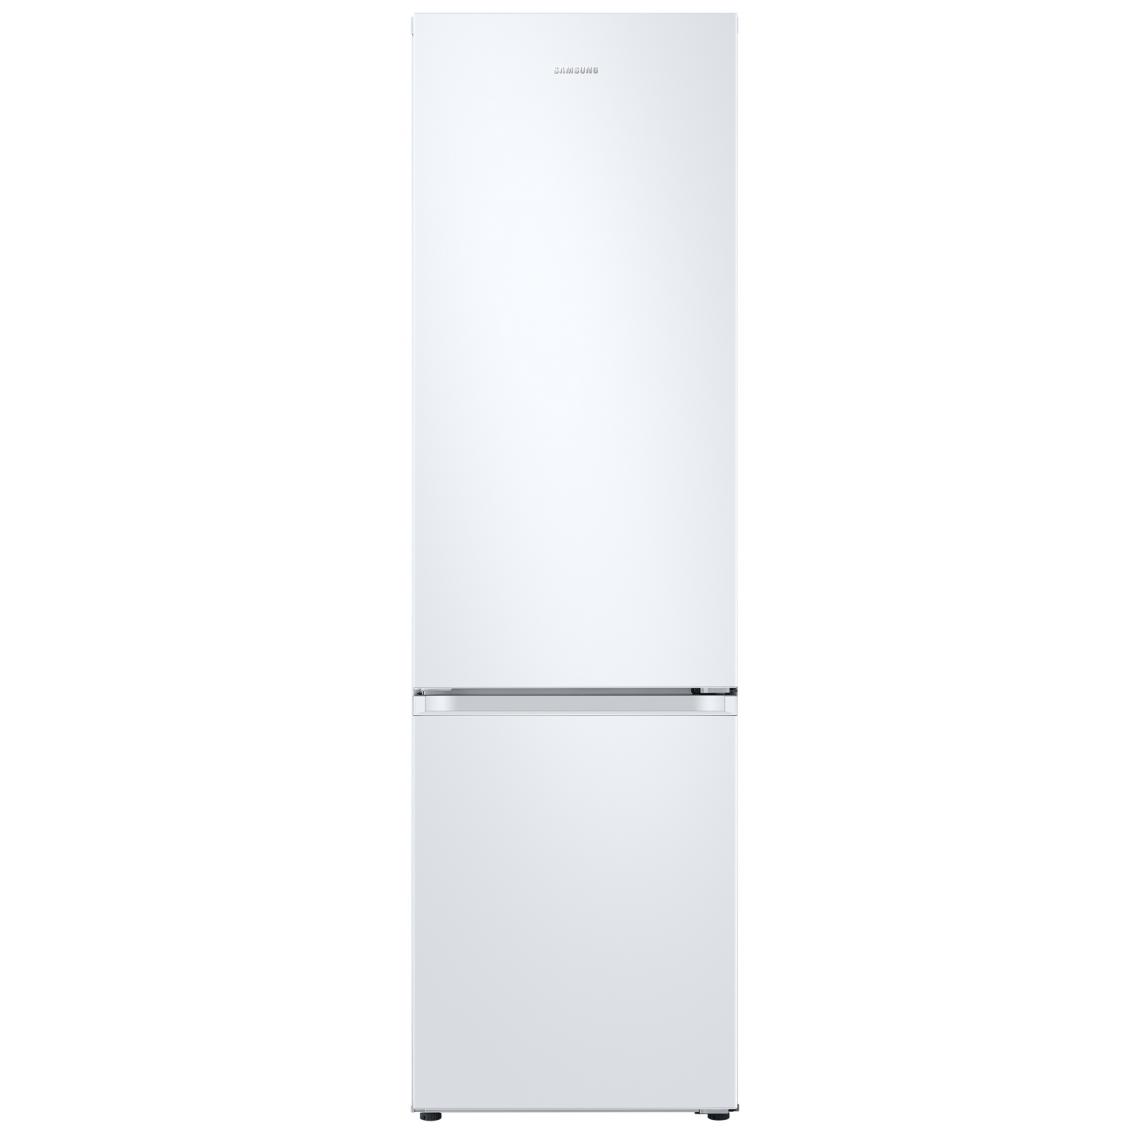 Samsung - samsung - rb3et600fww - Réfrigérateur